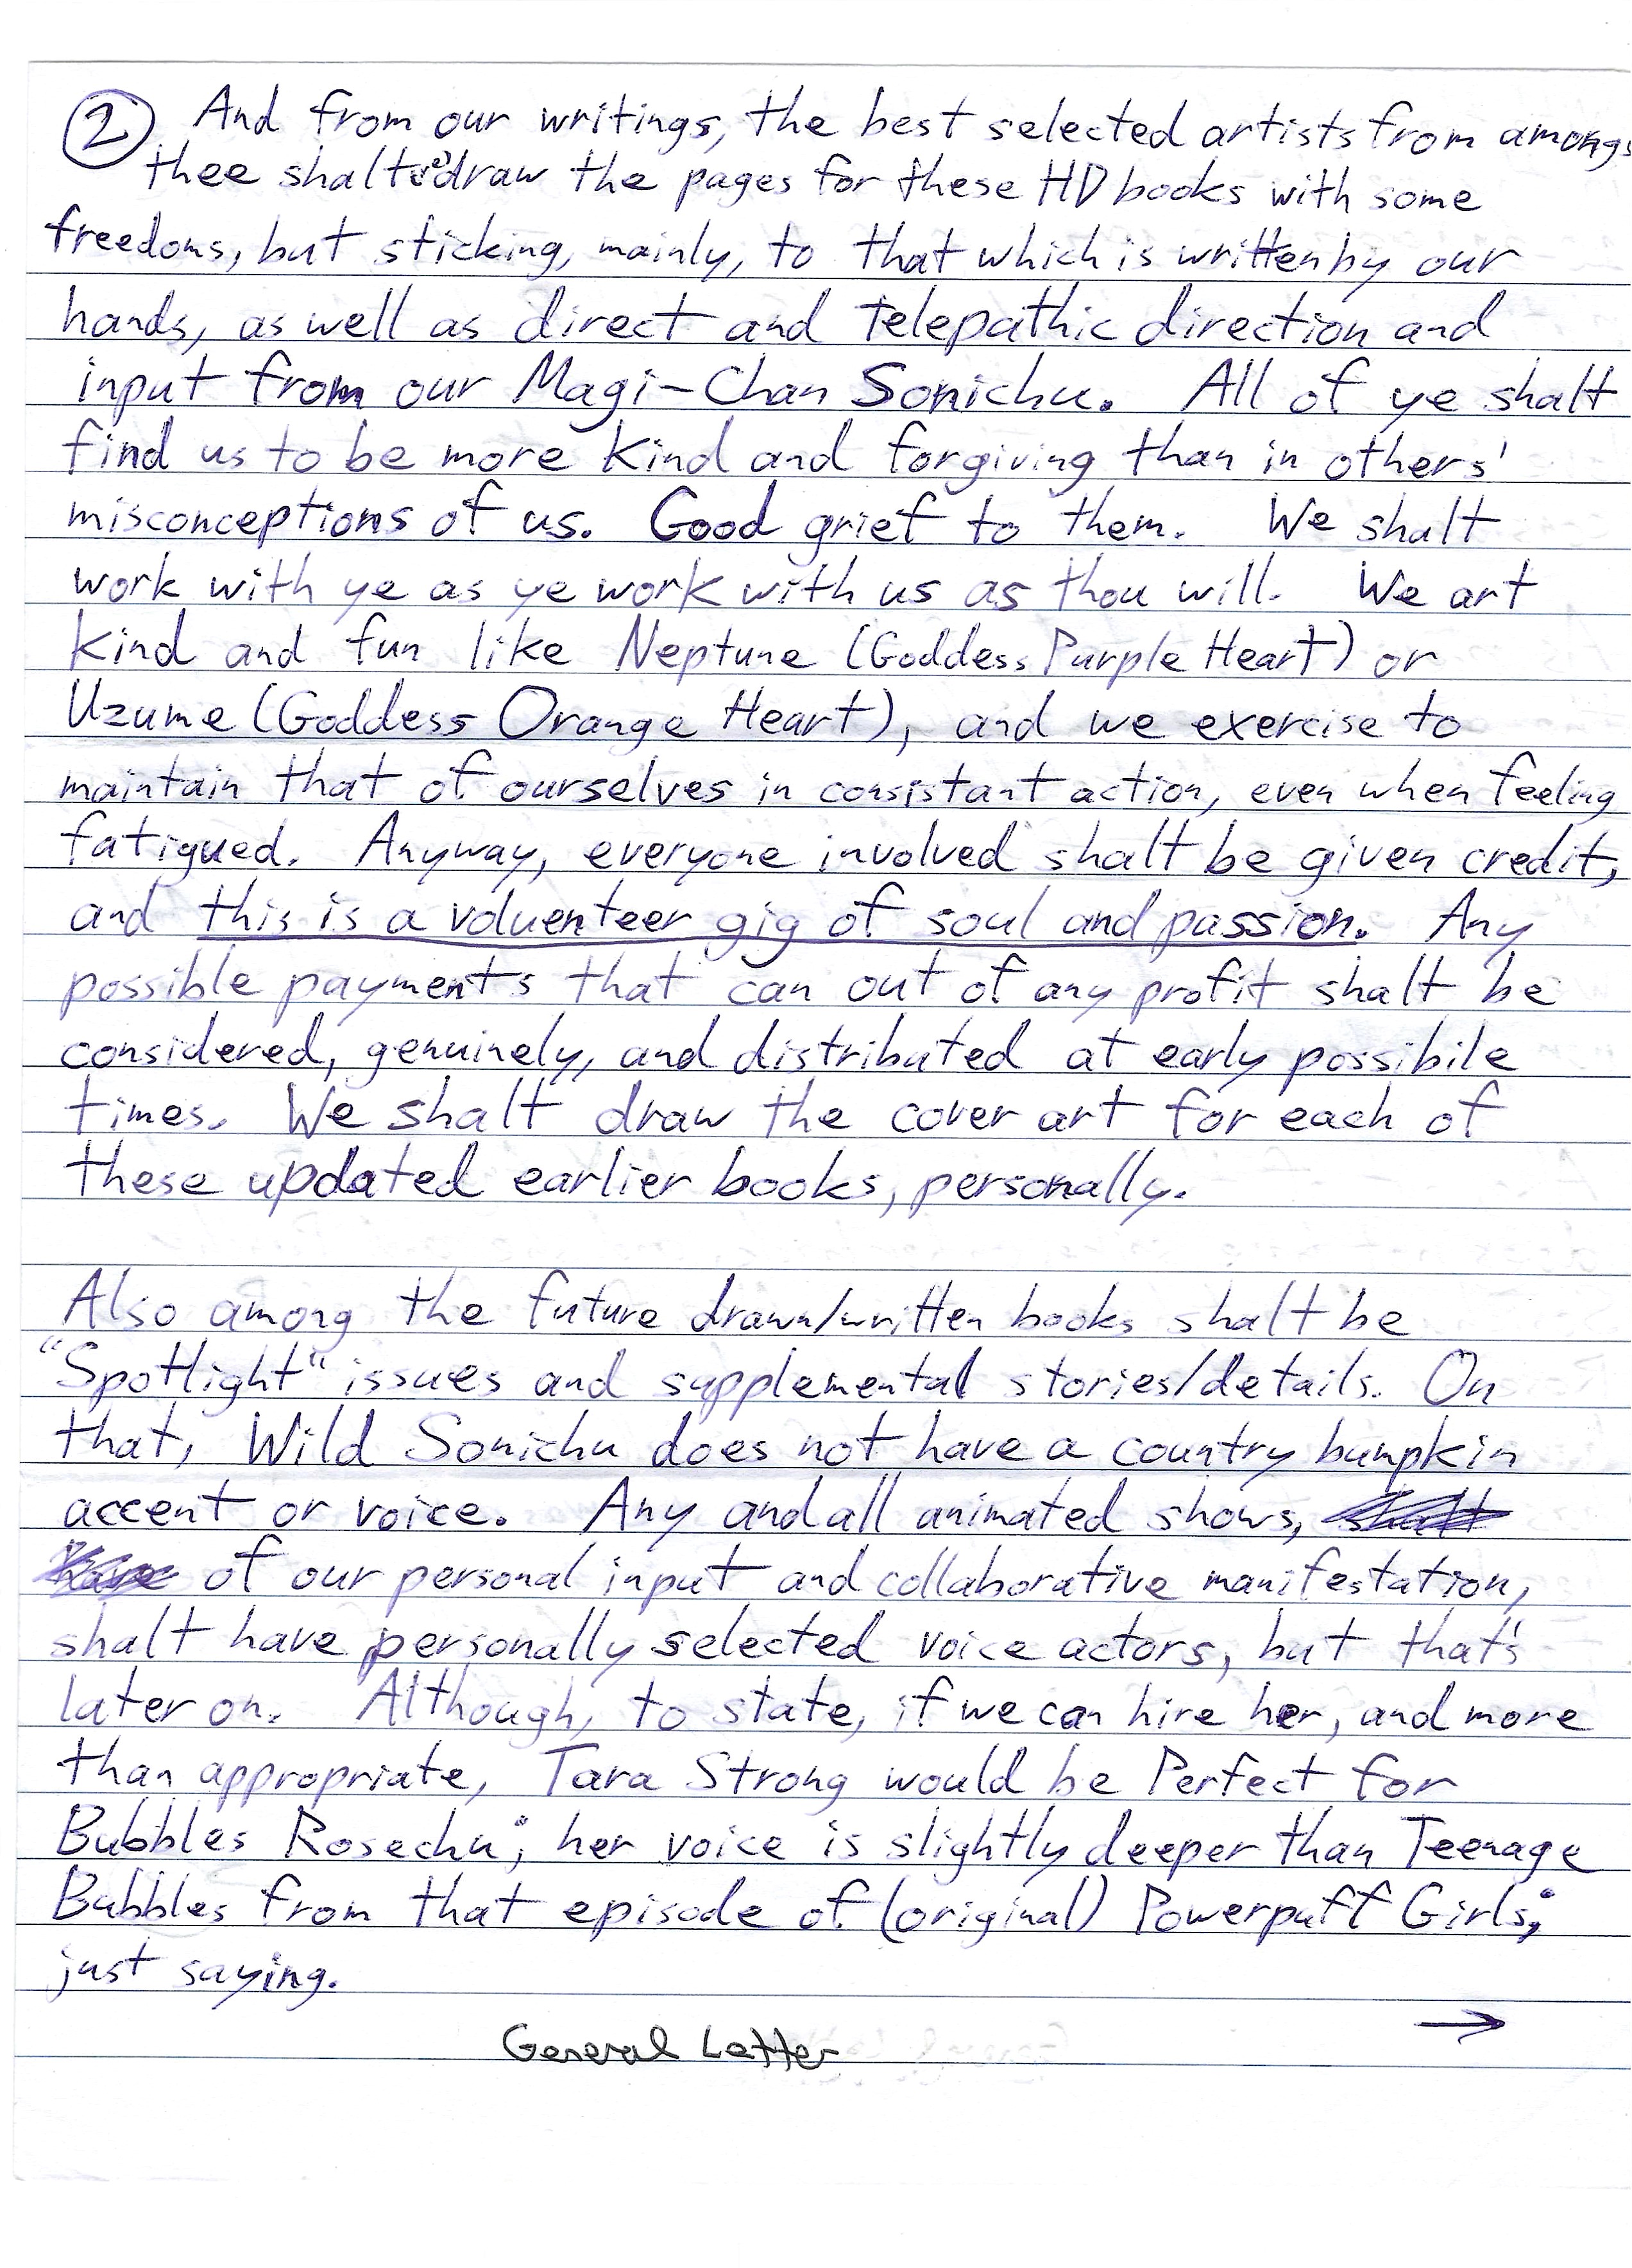 General Letter Page 3.jpg